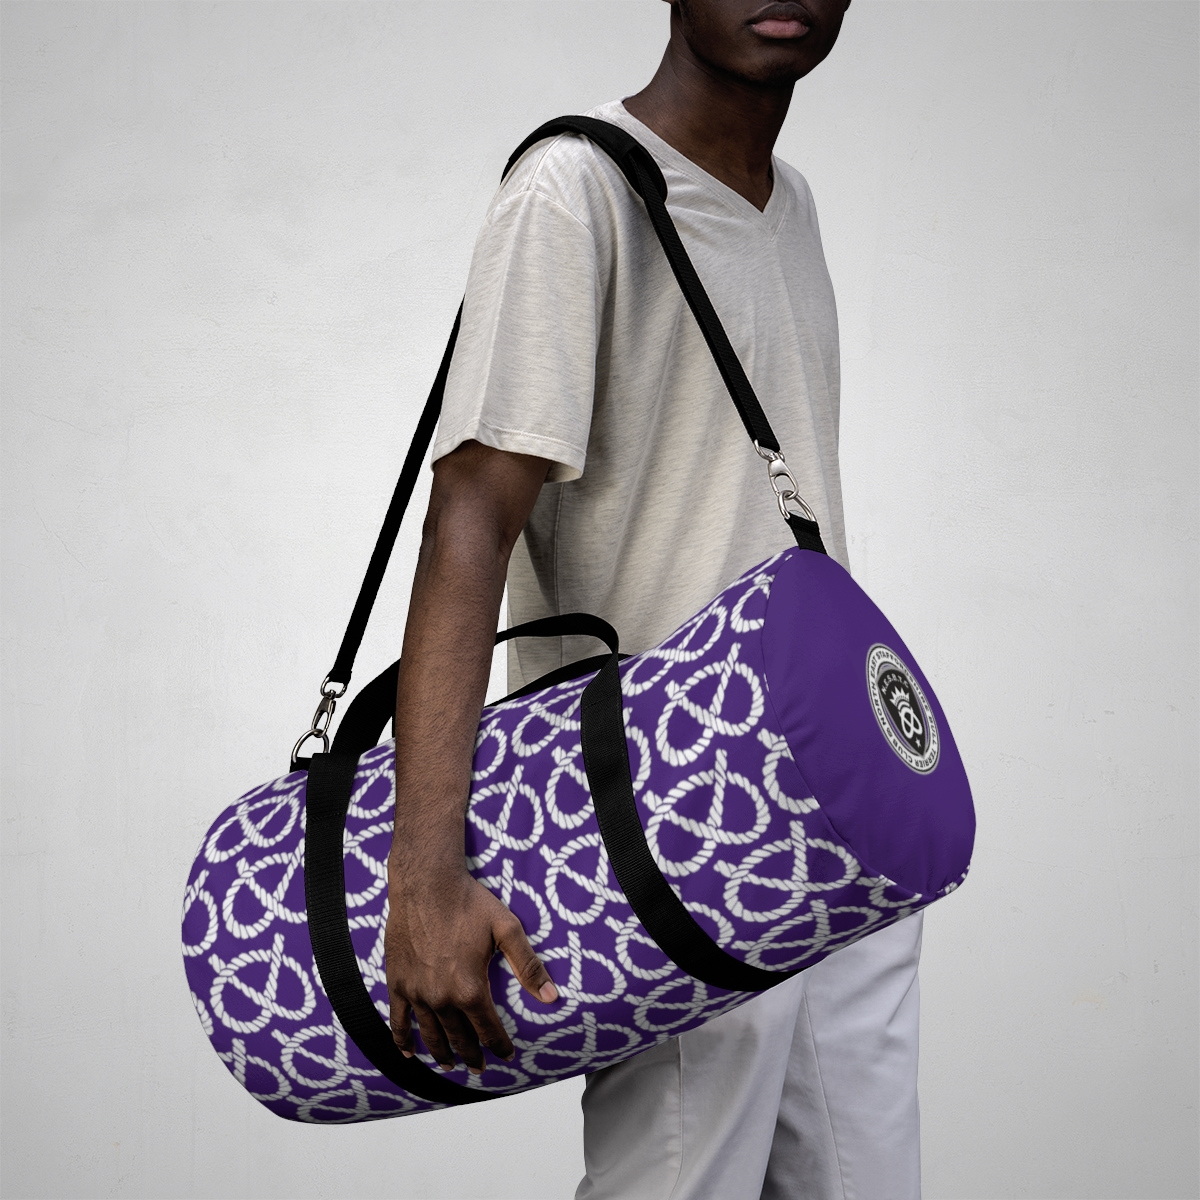 NESBTC Logo & Knot Purple Duffel Bag